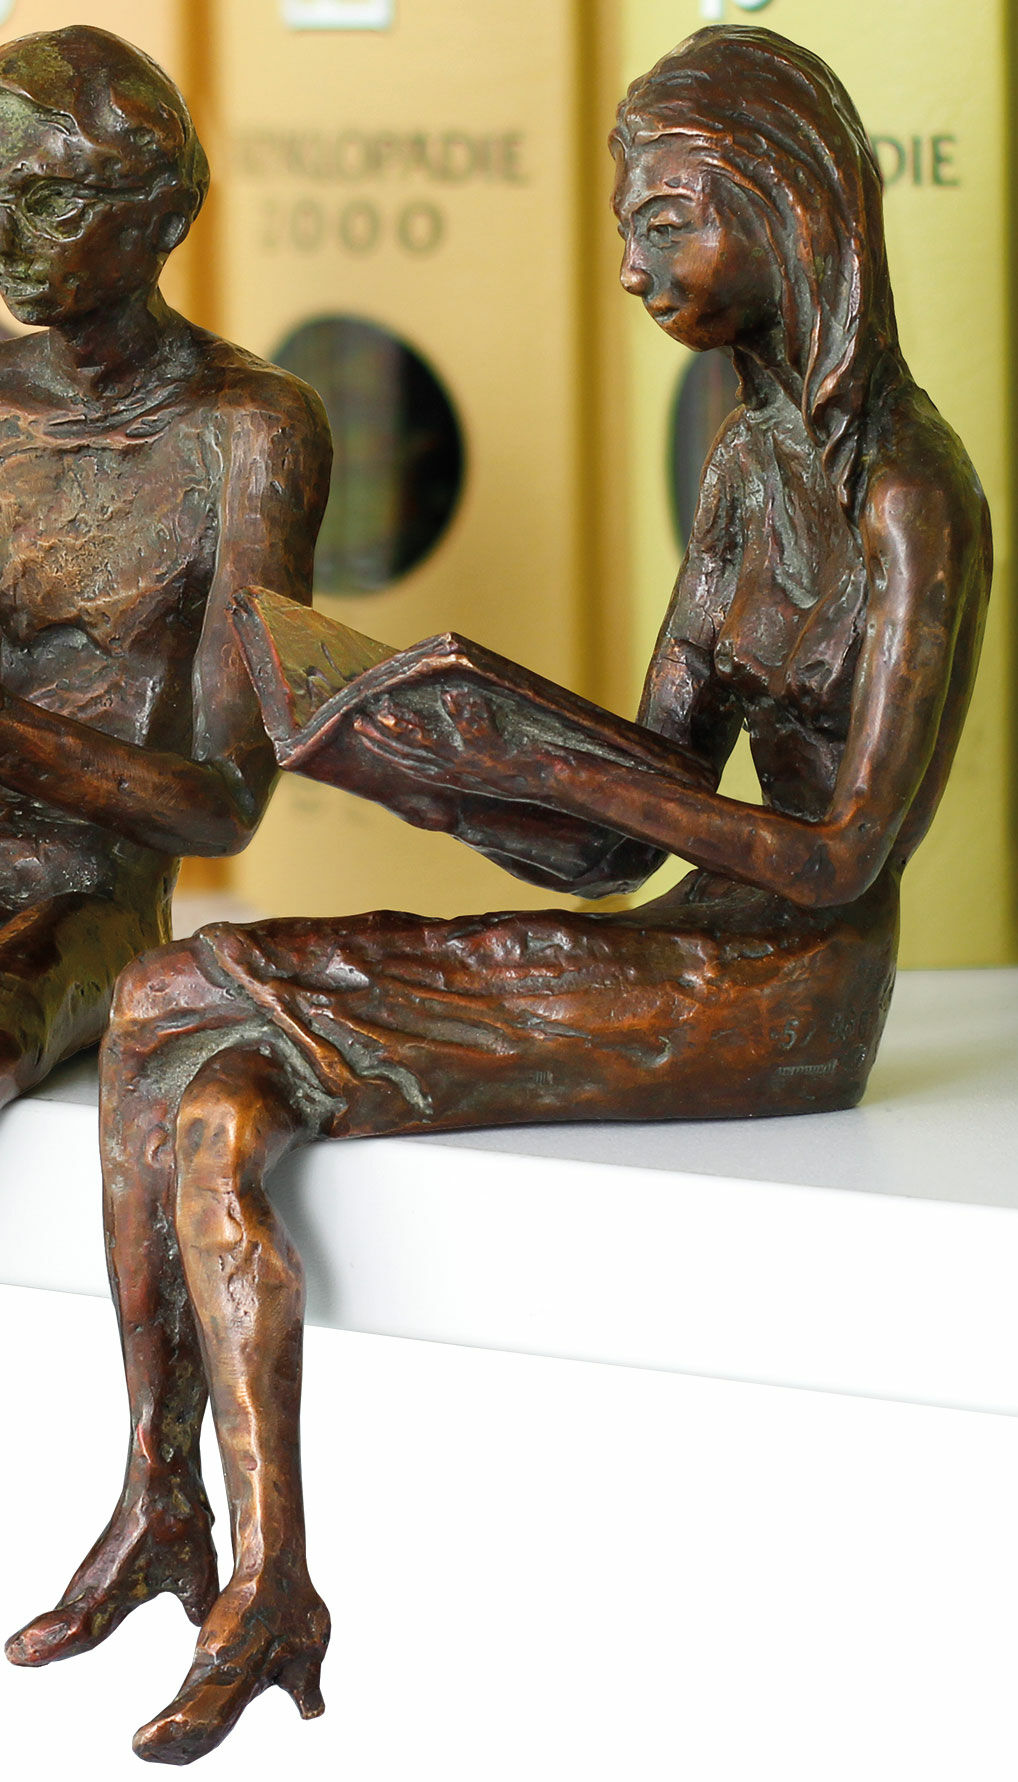 Sculpture / shelf sitter "Reading Woman", metal casting by Birgit Stauch